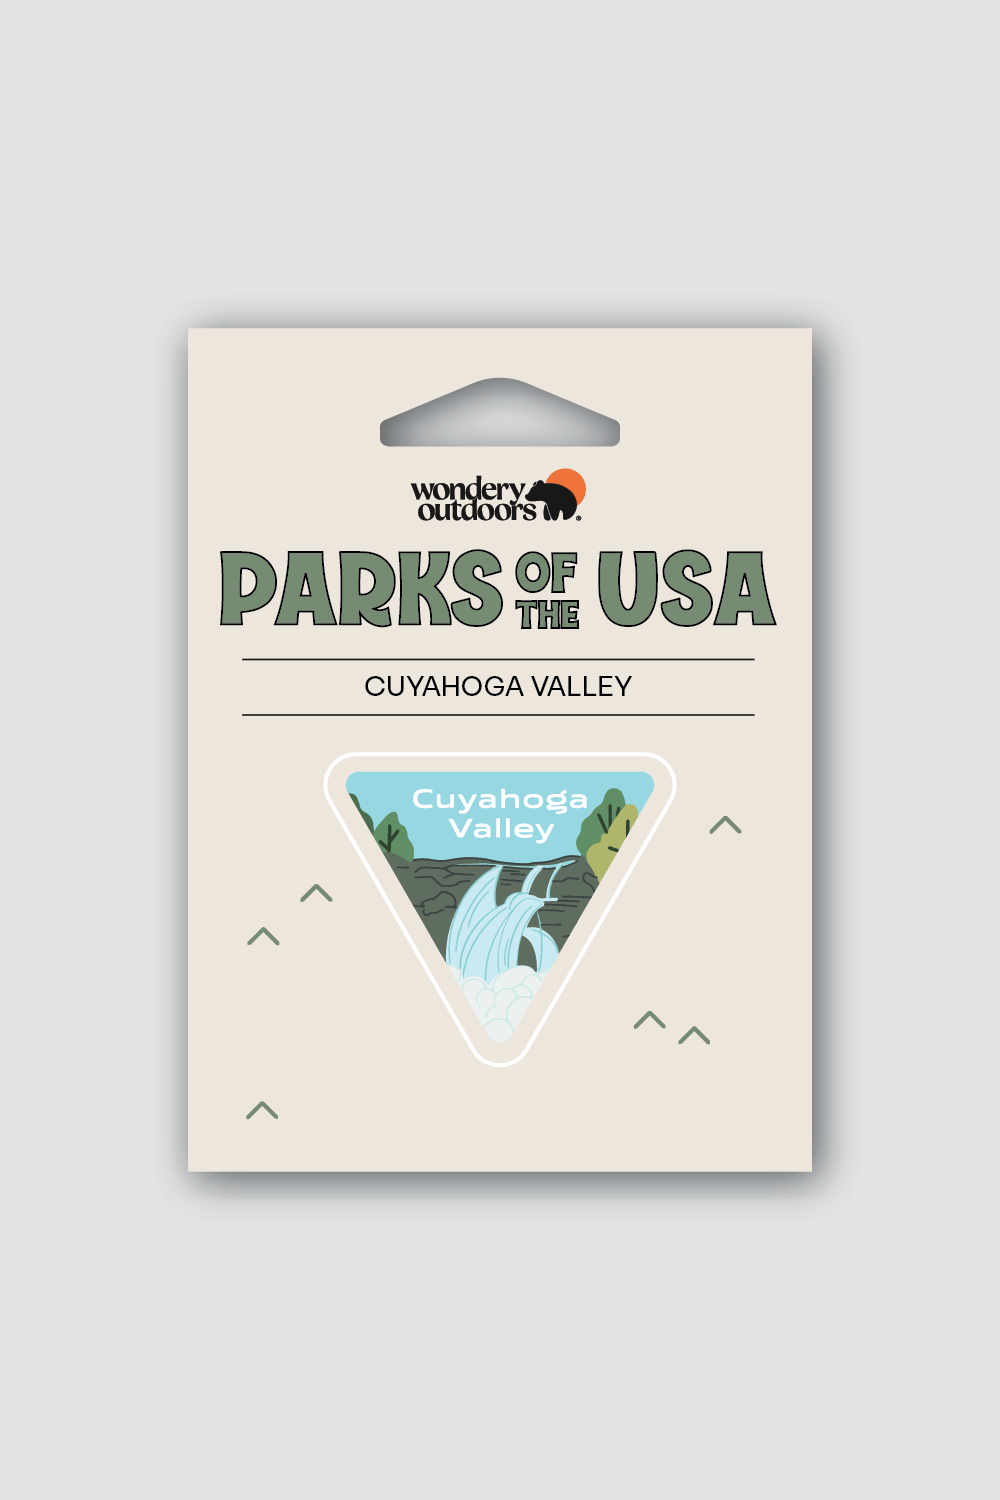 #national park_cuyahoga valley _USA National Parks souvenir sticker gift sets